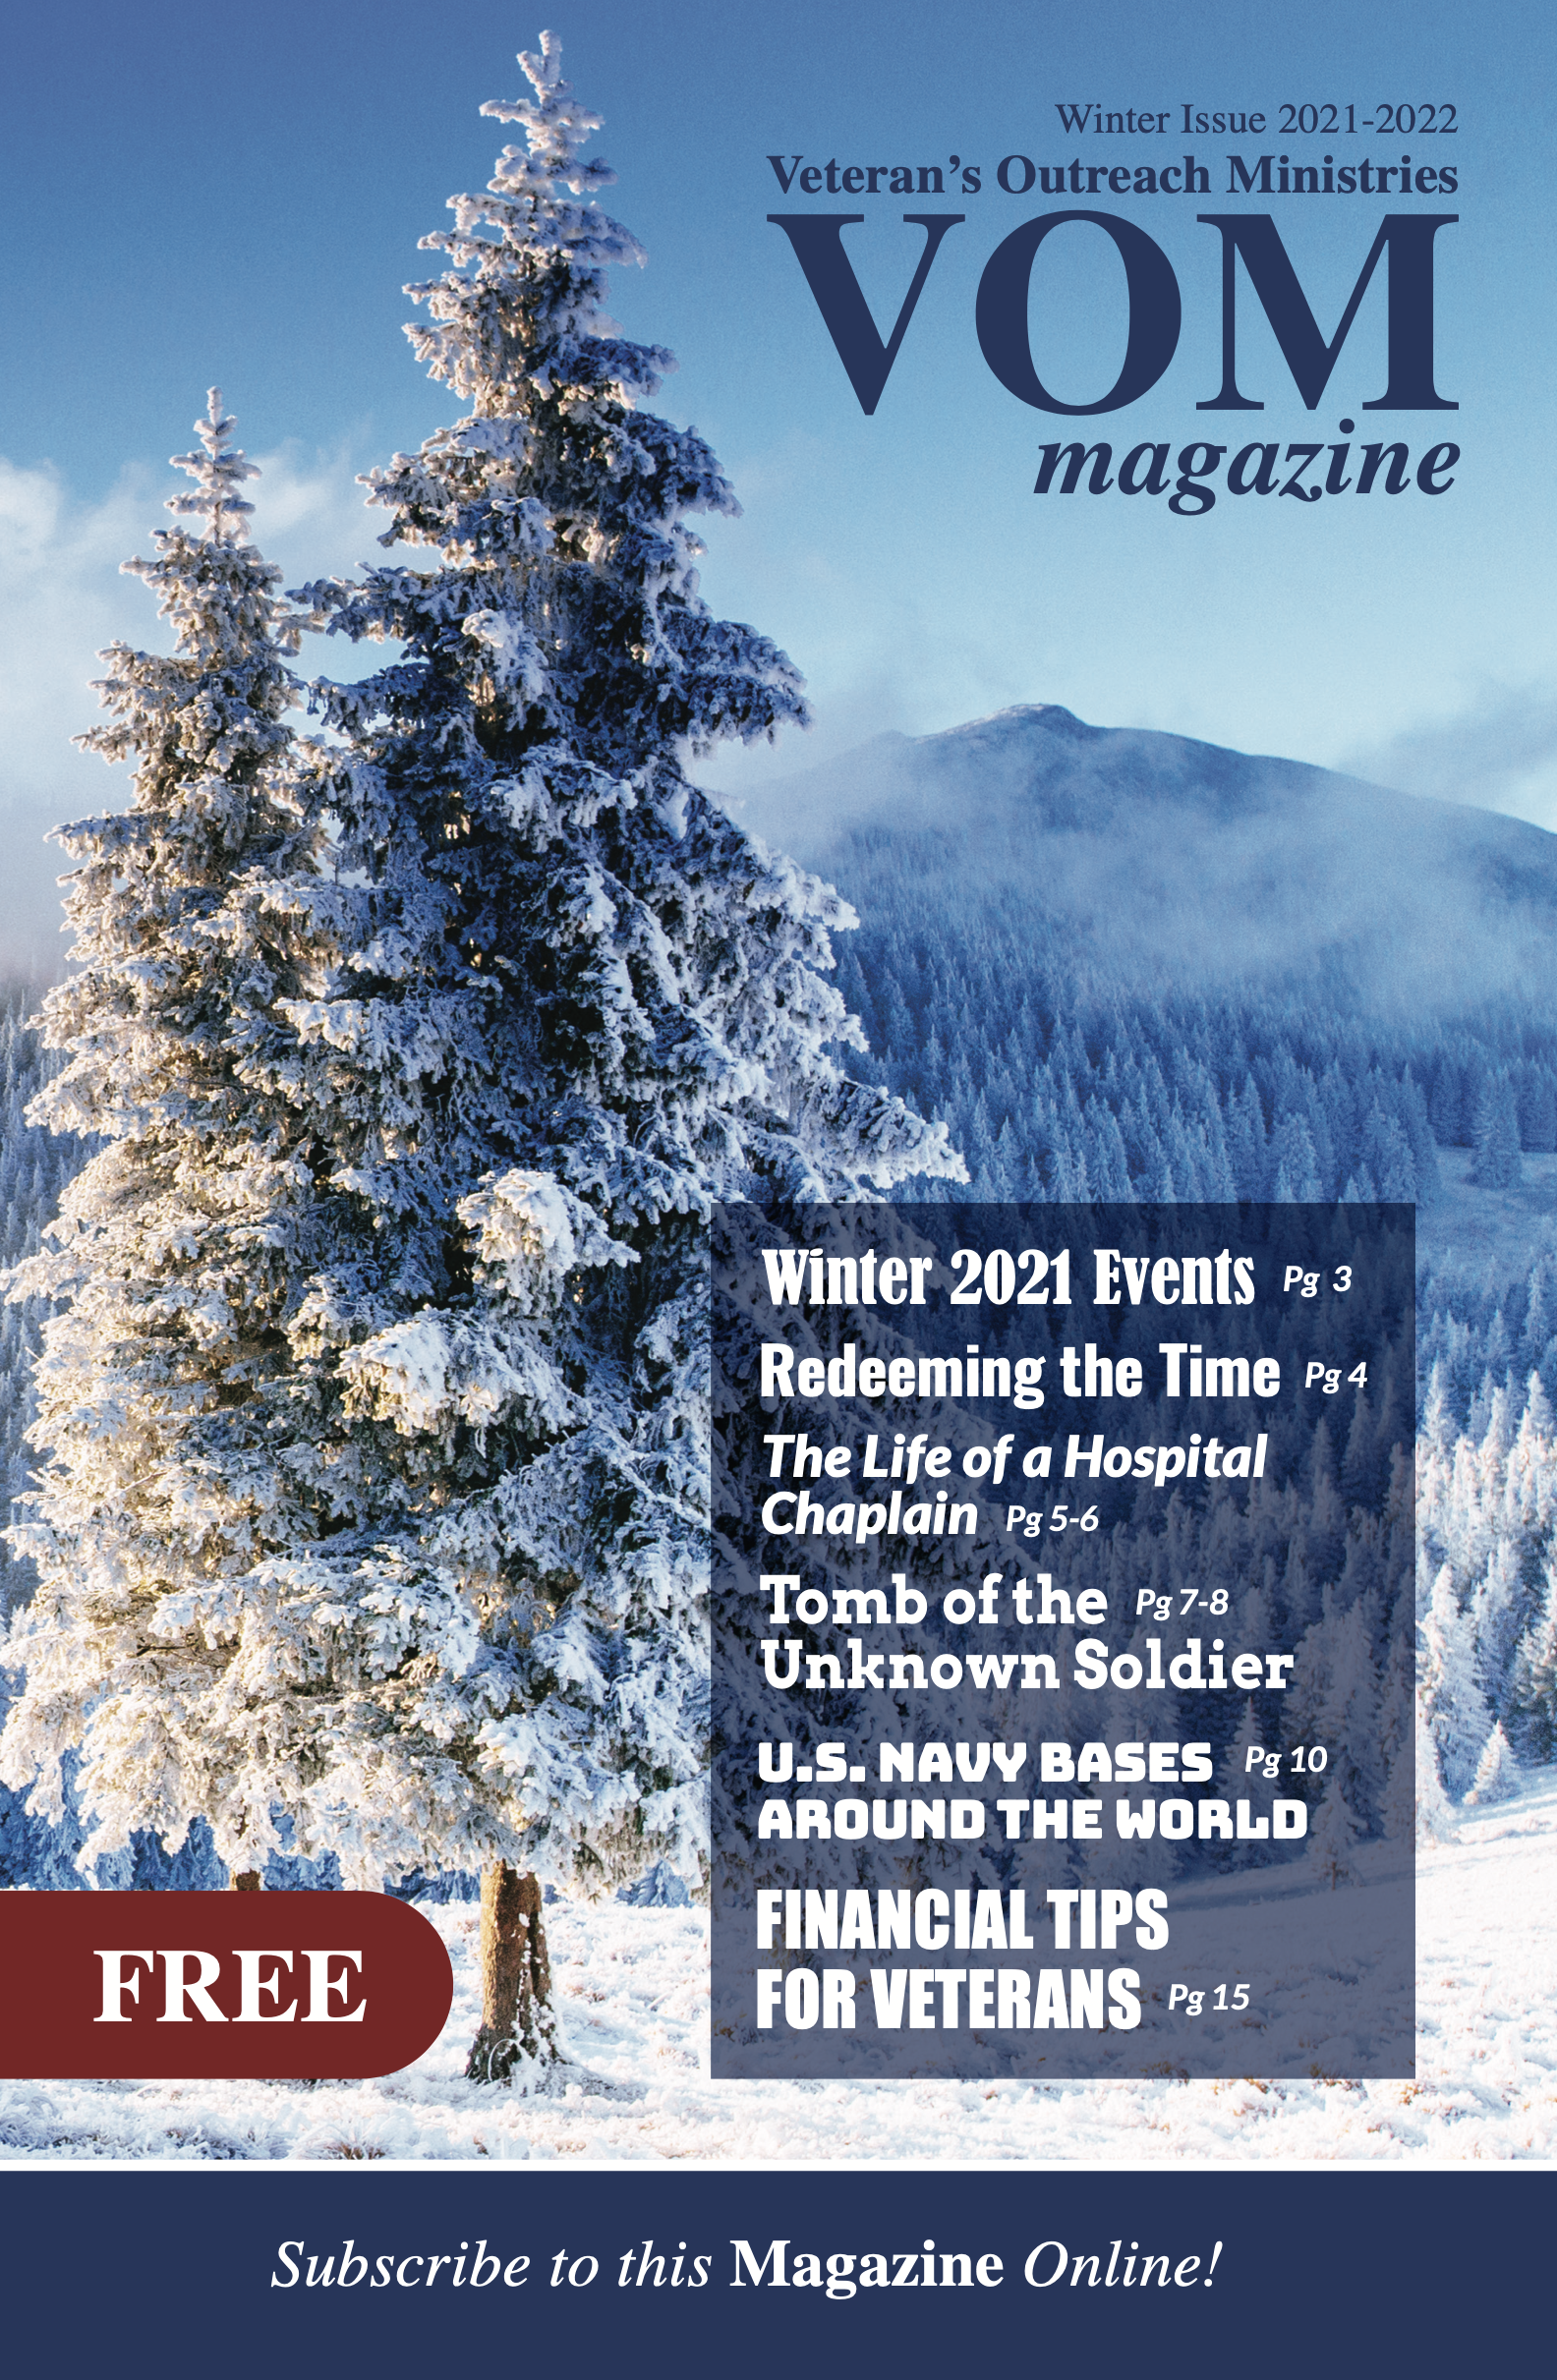 Winter 2021-2022 VOM Magazine - Veteran's Outreach Ministries